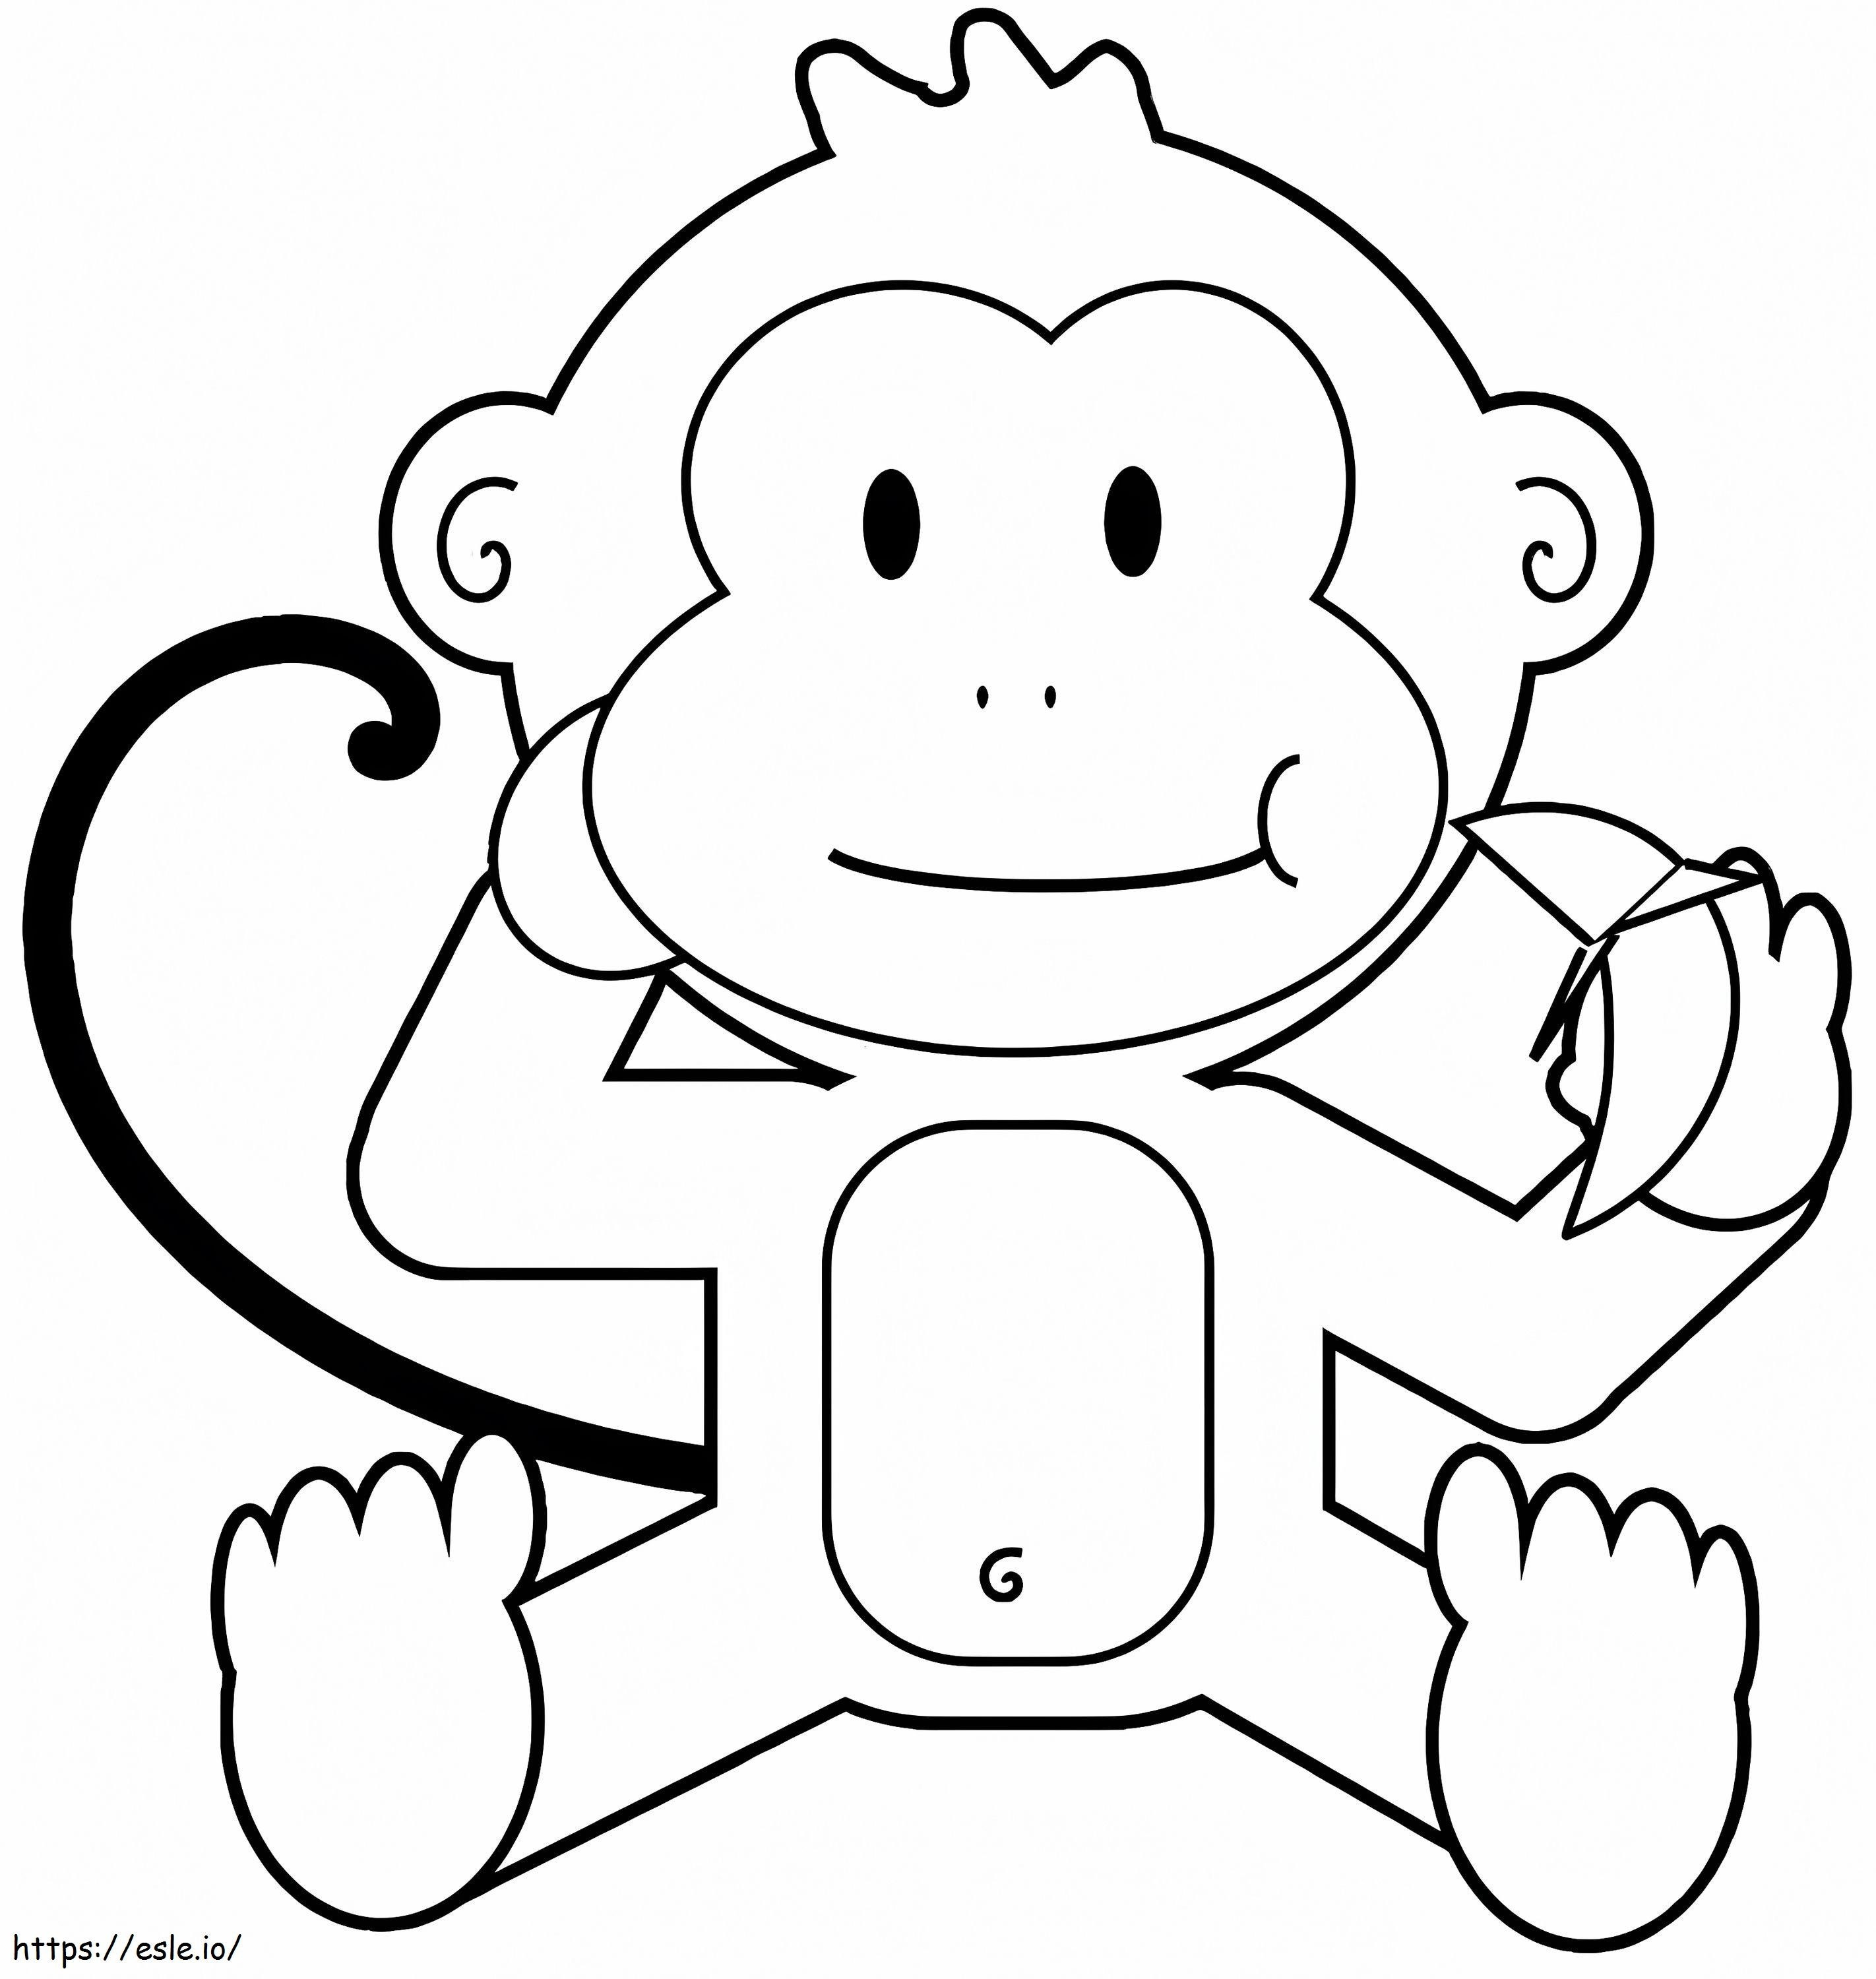 Cartoon-Affe, der Banane isst ausmalbilder